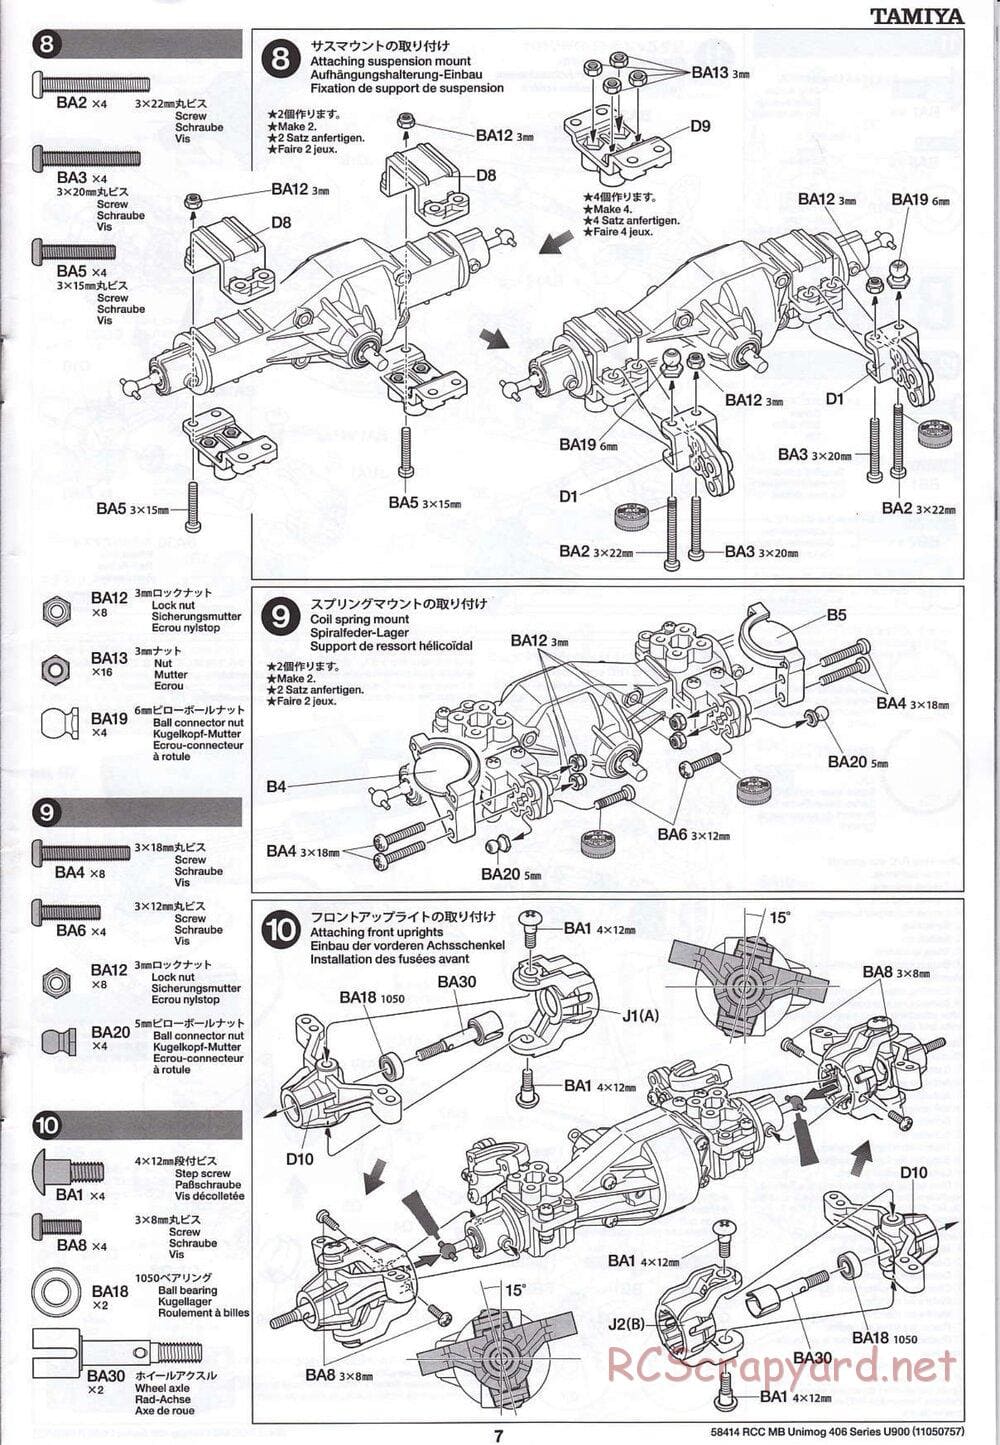 Tamiya - Mercedes-Benz Unimog 406 Series U900 - CR-01 Chassis - Manual - Page 7